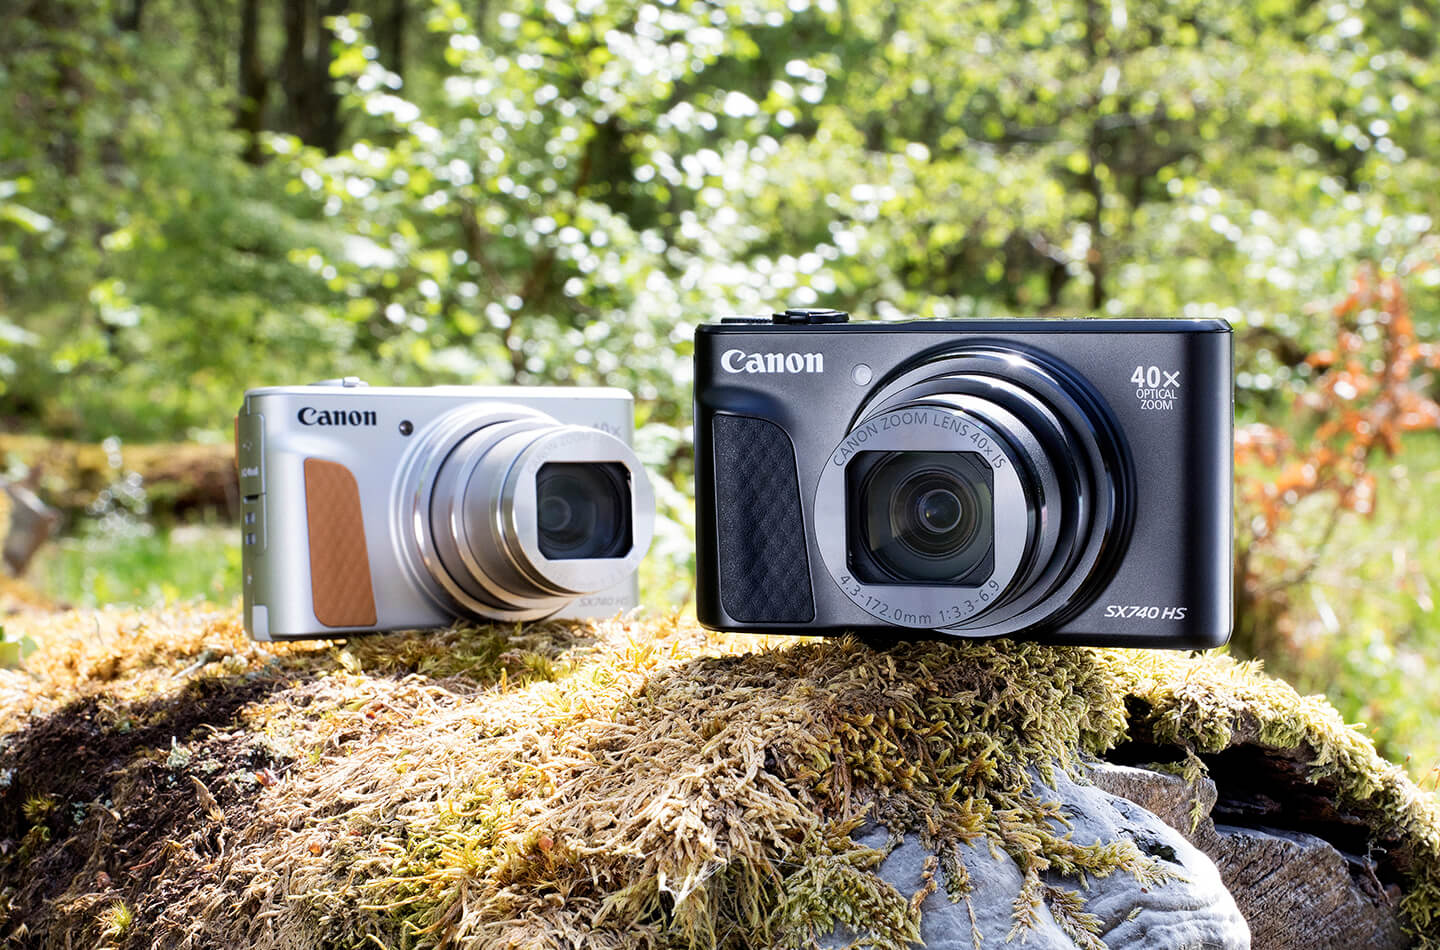 Canon introduceert PowerShot SX740 HS camera met 40x zoom | LetsGoDigital